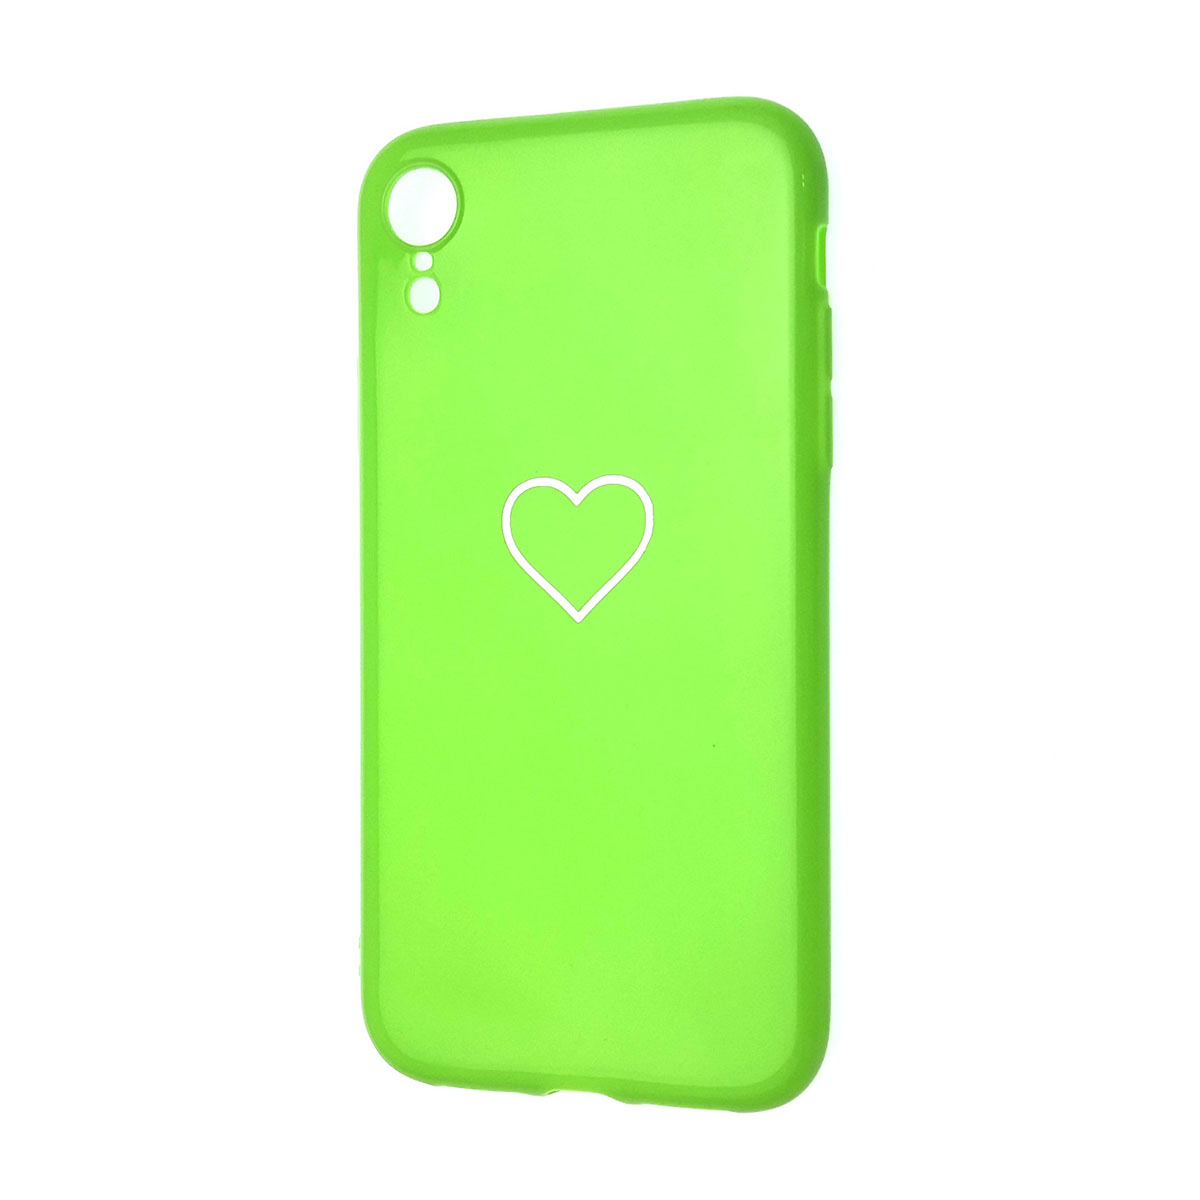 Чехол накладка для APPLE iPhone XR, силикон, глянцевый, рисунок Сердце, цвет зеленый.